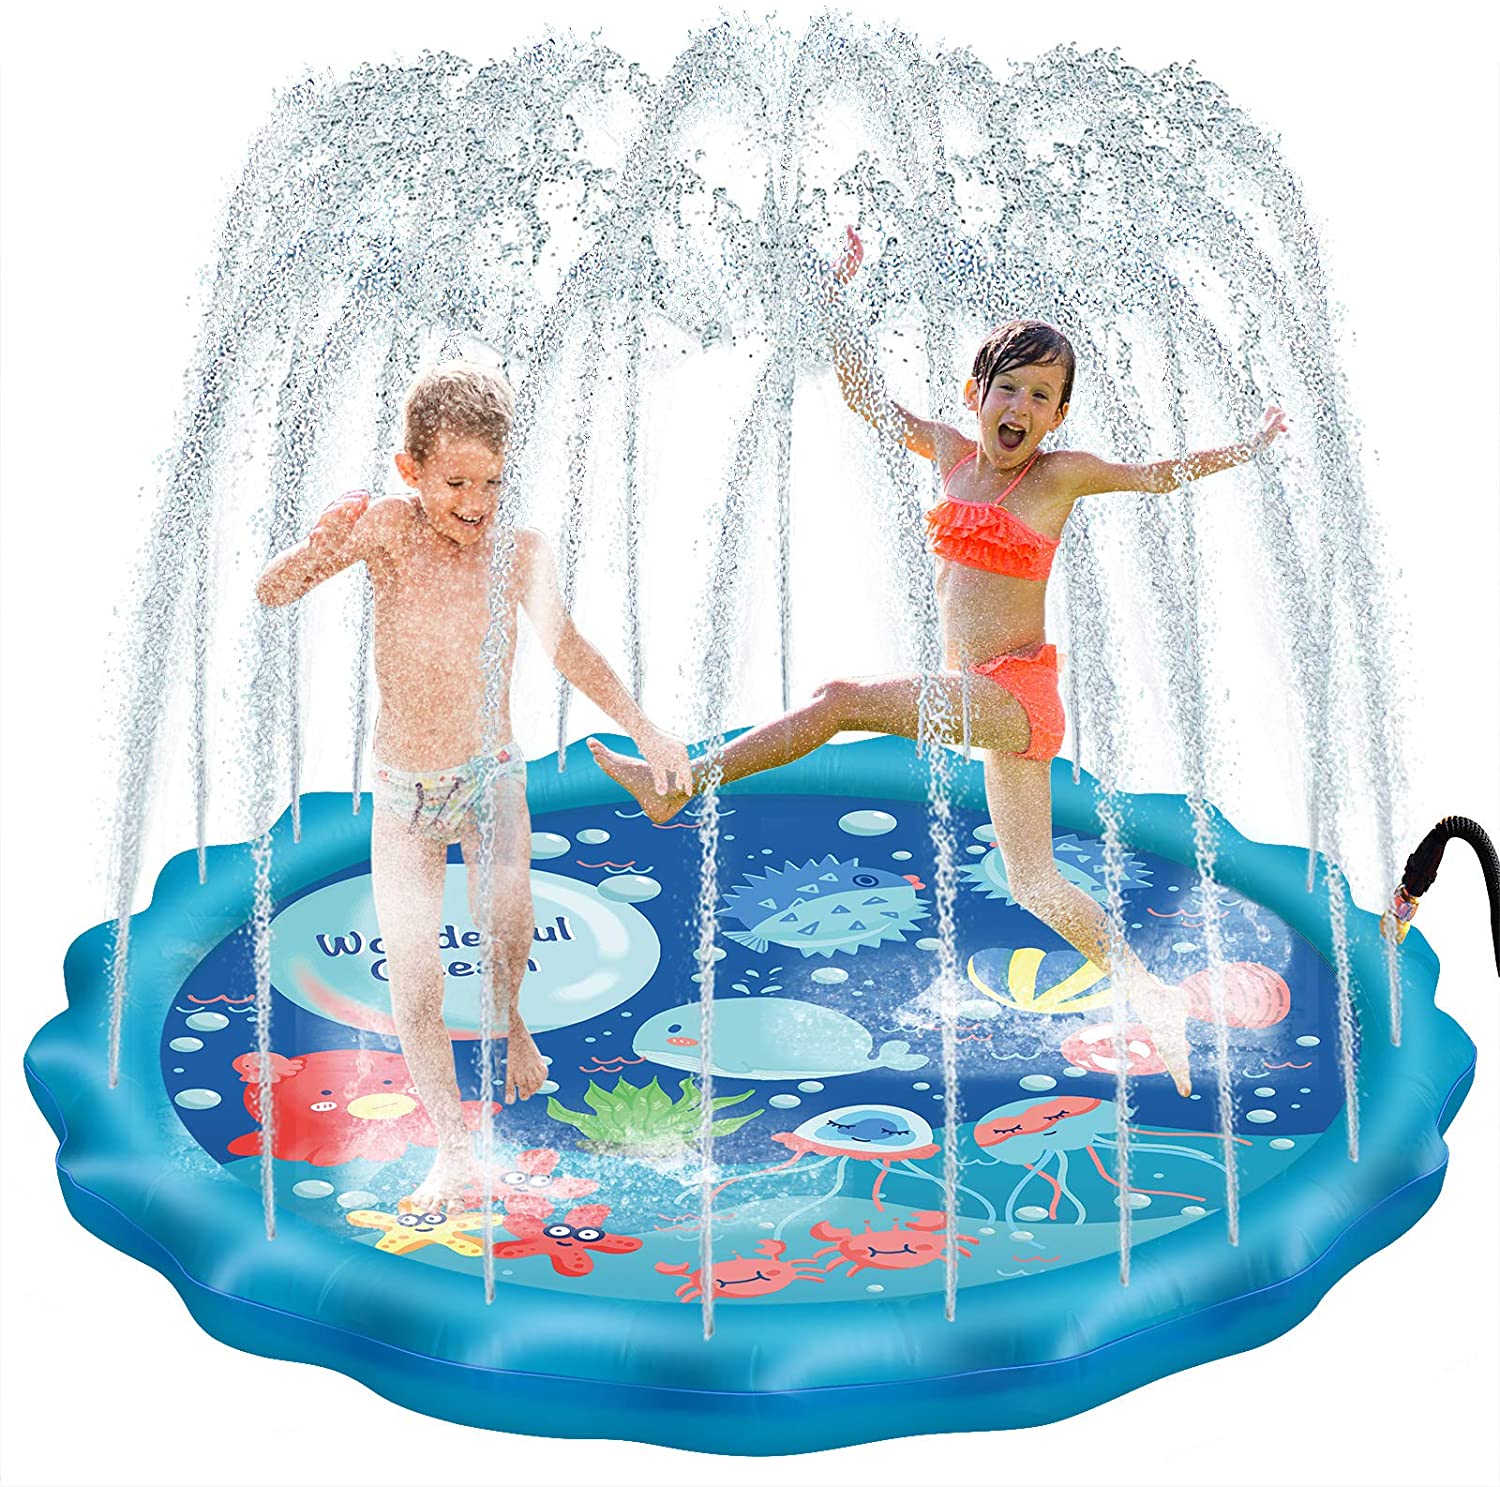 Intera Sprinkler for Kids, Splash Pad, Wading Pool and Kiddie Pool, Summer Outdoor Water Play Mat for for Boys Girls Fun Sprinkler Pool Sprinkler Toy Inflatable Spray Pad (Blue)